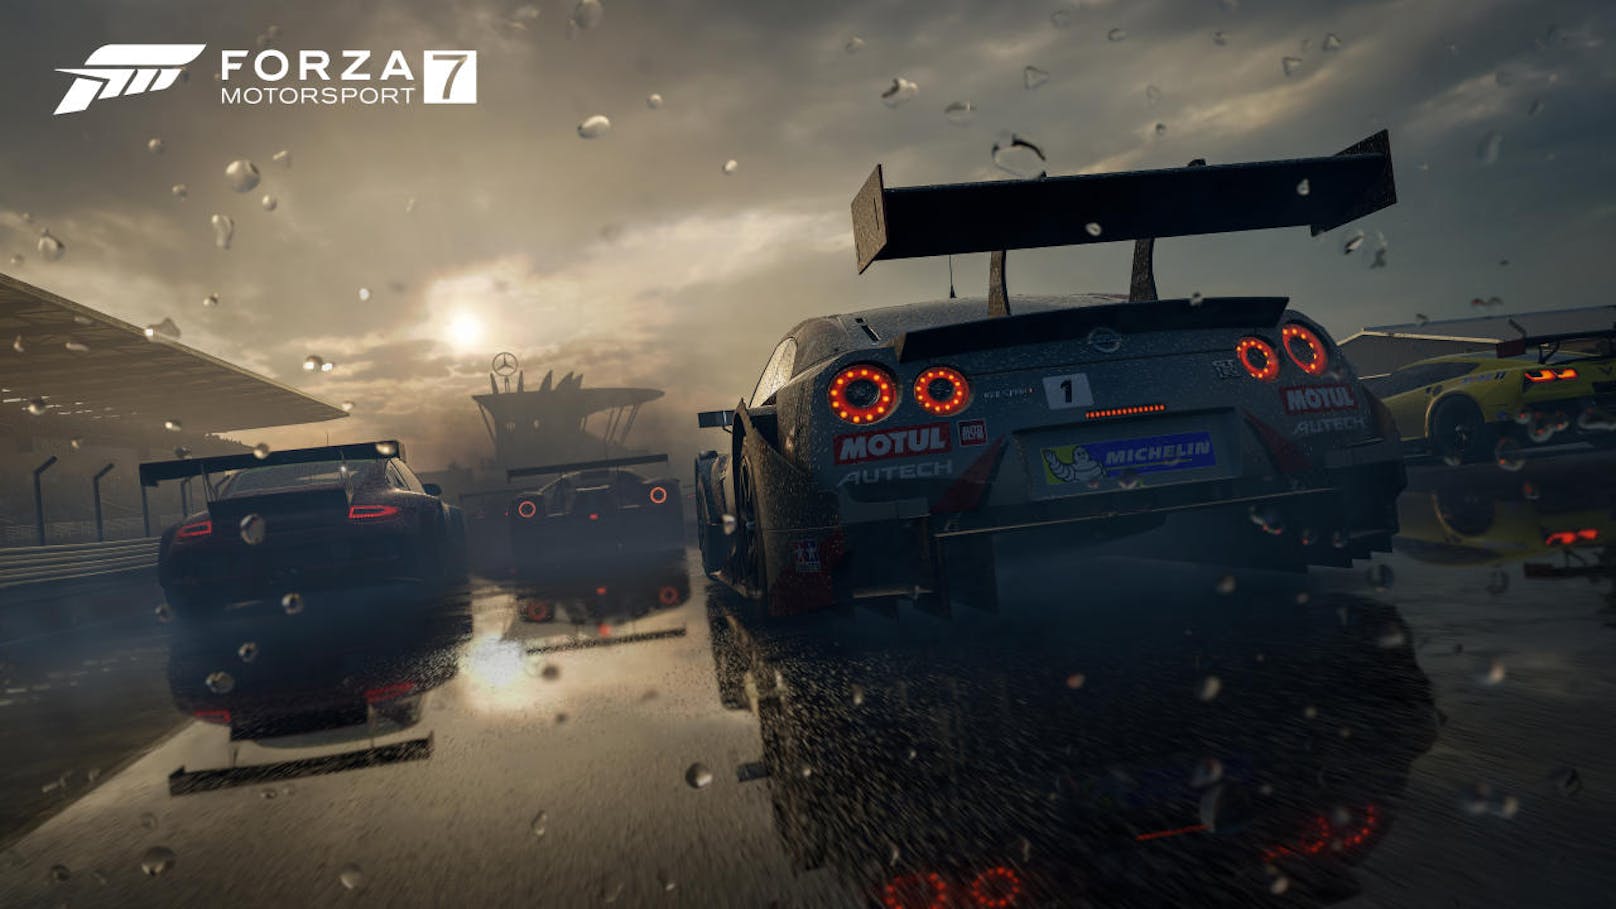 <b>Best Sports / Racing Game</b>
Forza Motorsport 7